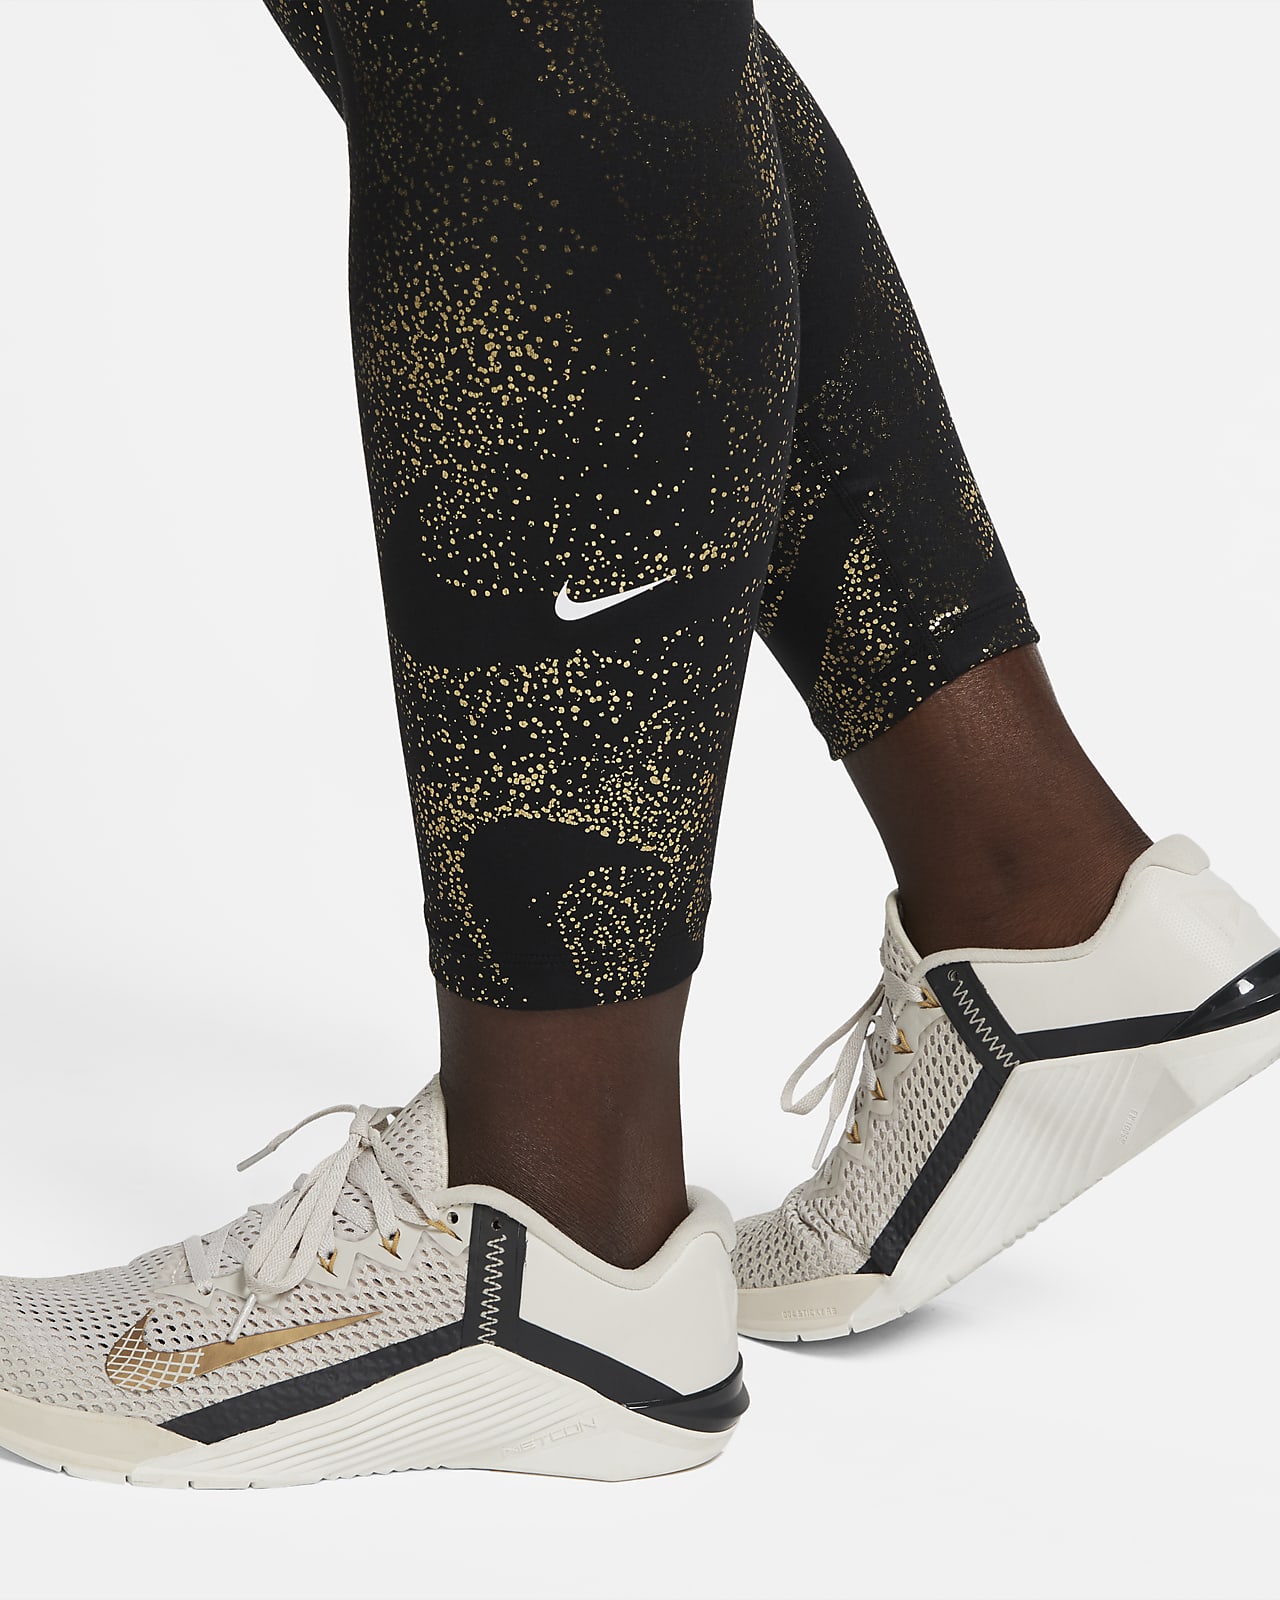 Buy Nike Women's Dri-FIT One Mid-Rise Printed Leggings Black in KSA -SSS